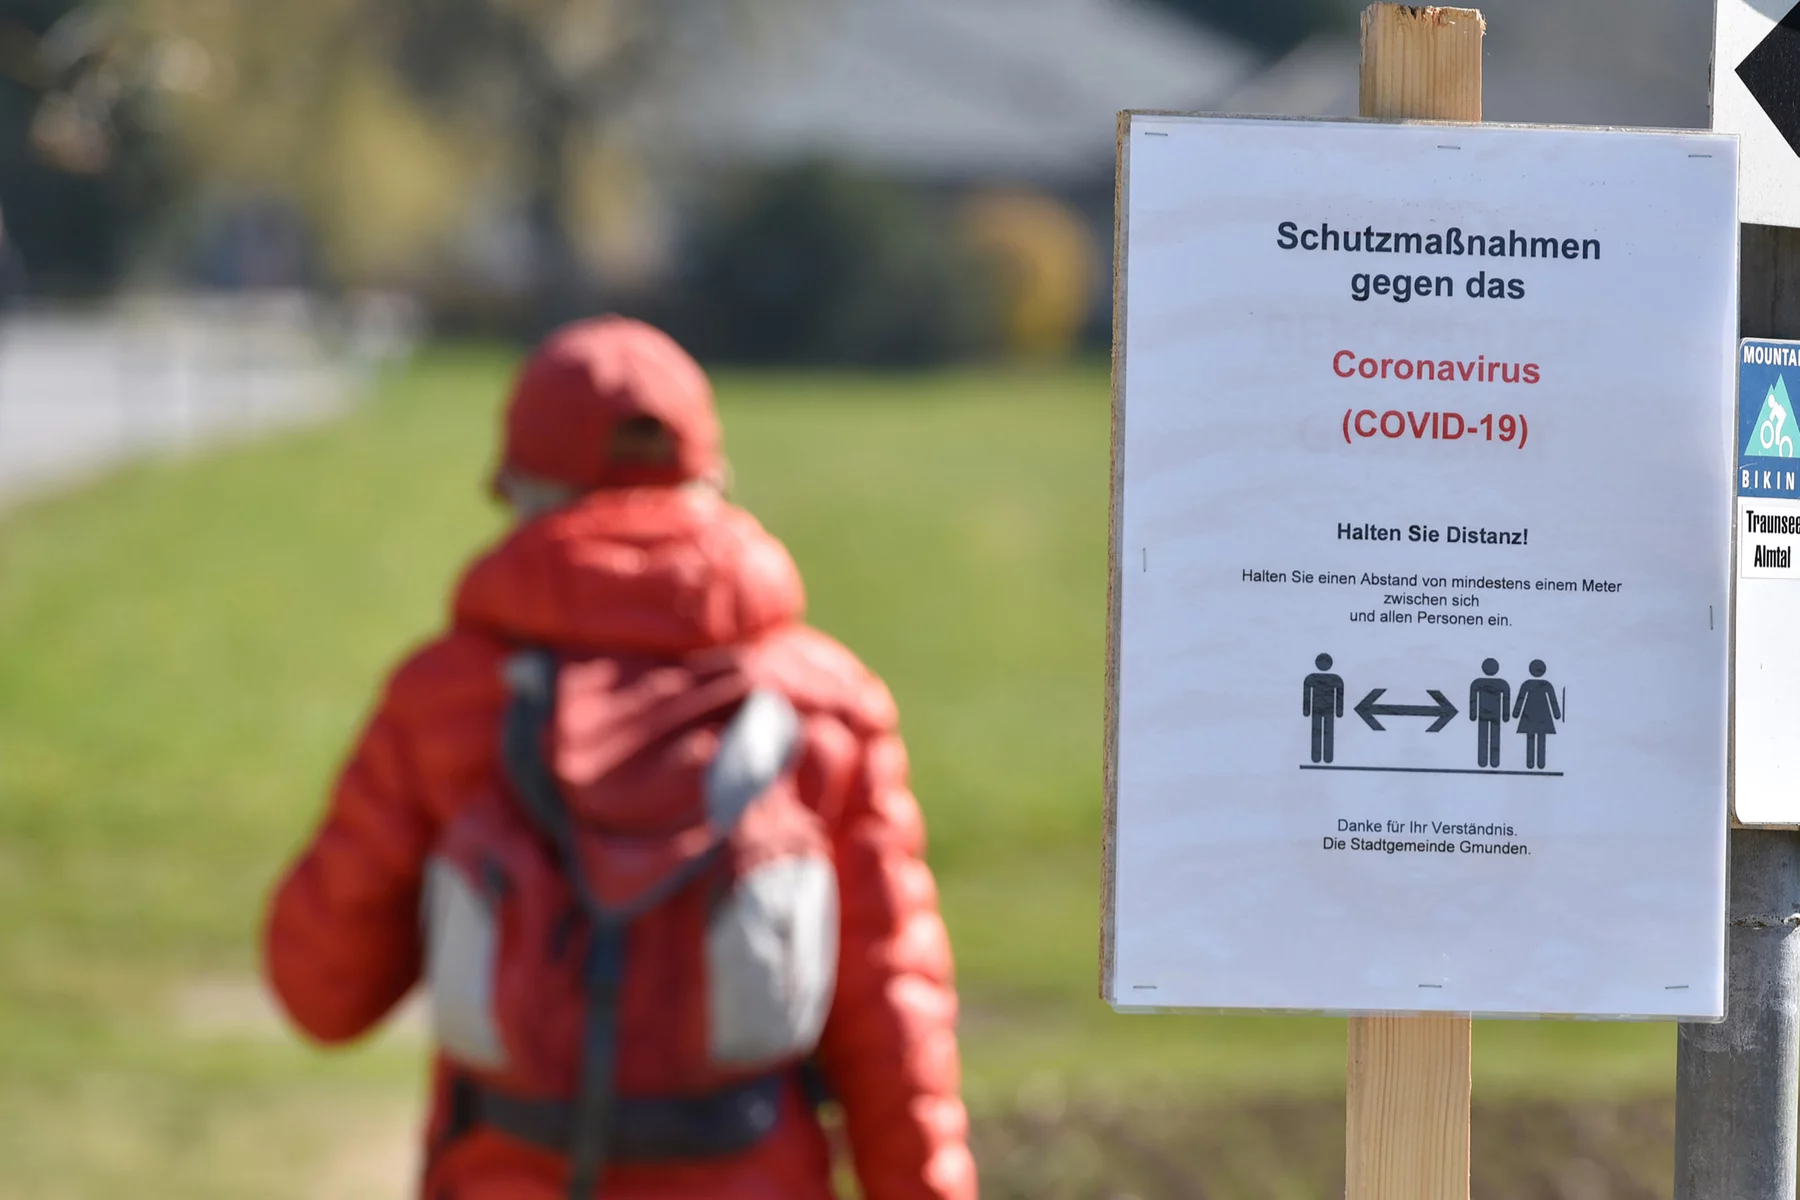 Coronavirus warning sign in Austria